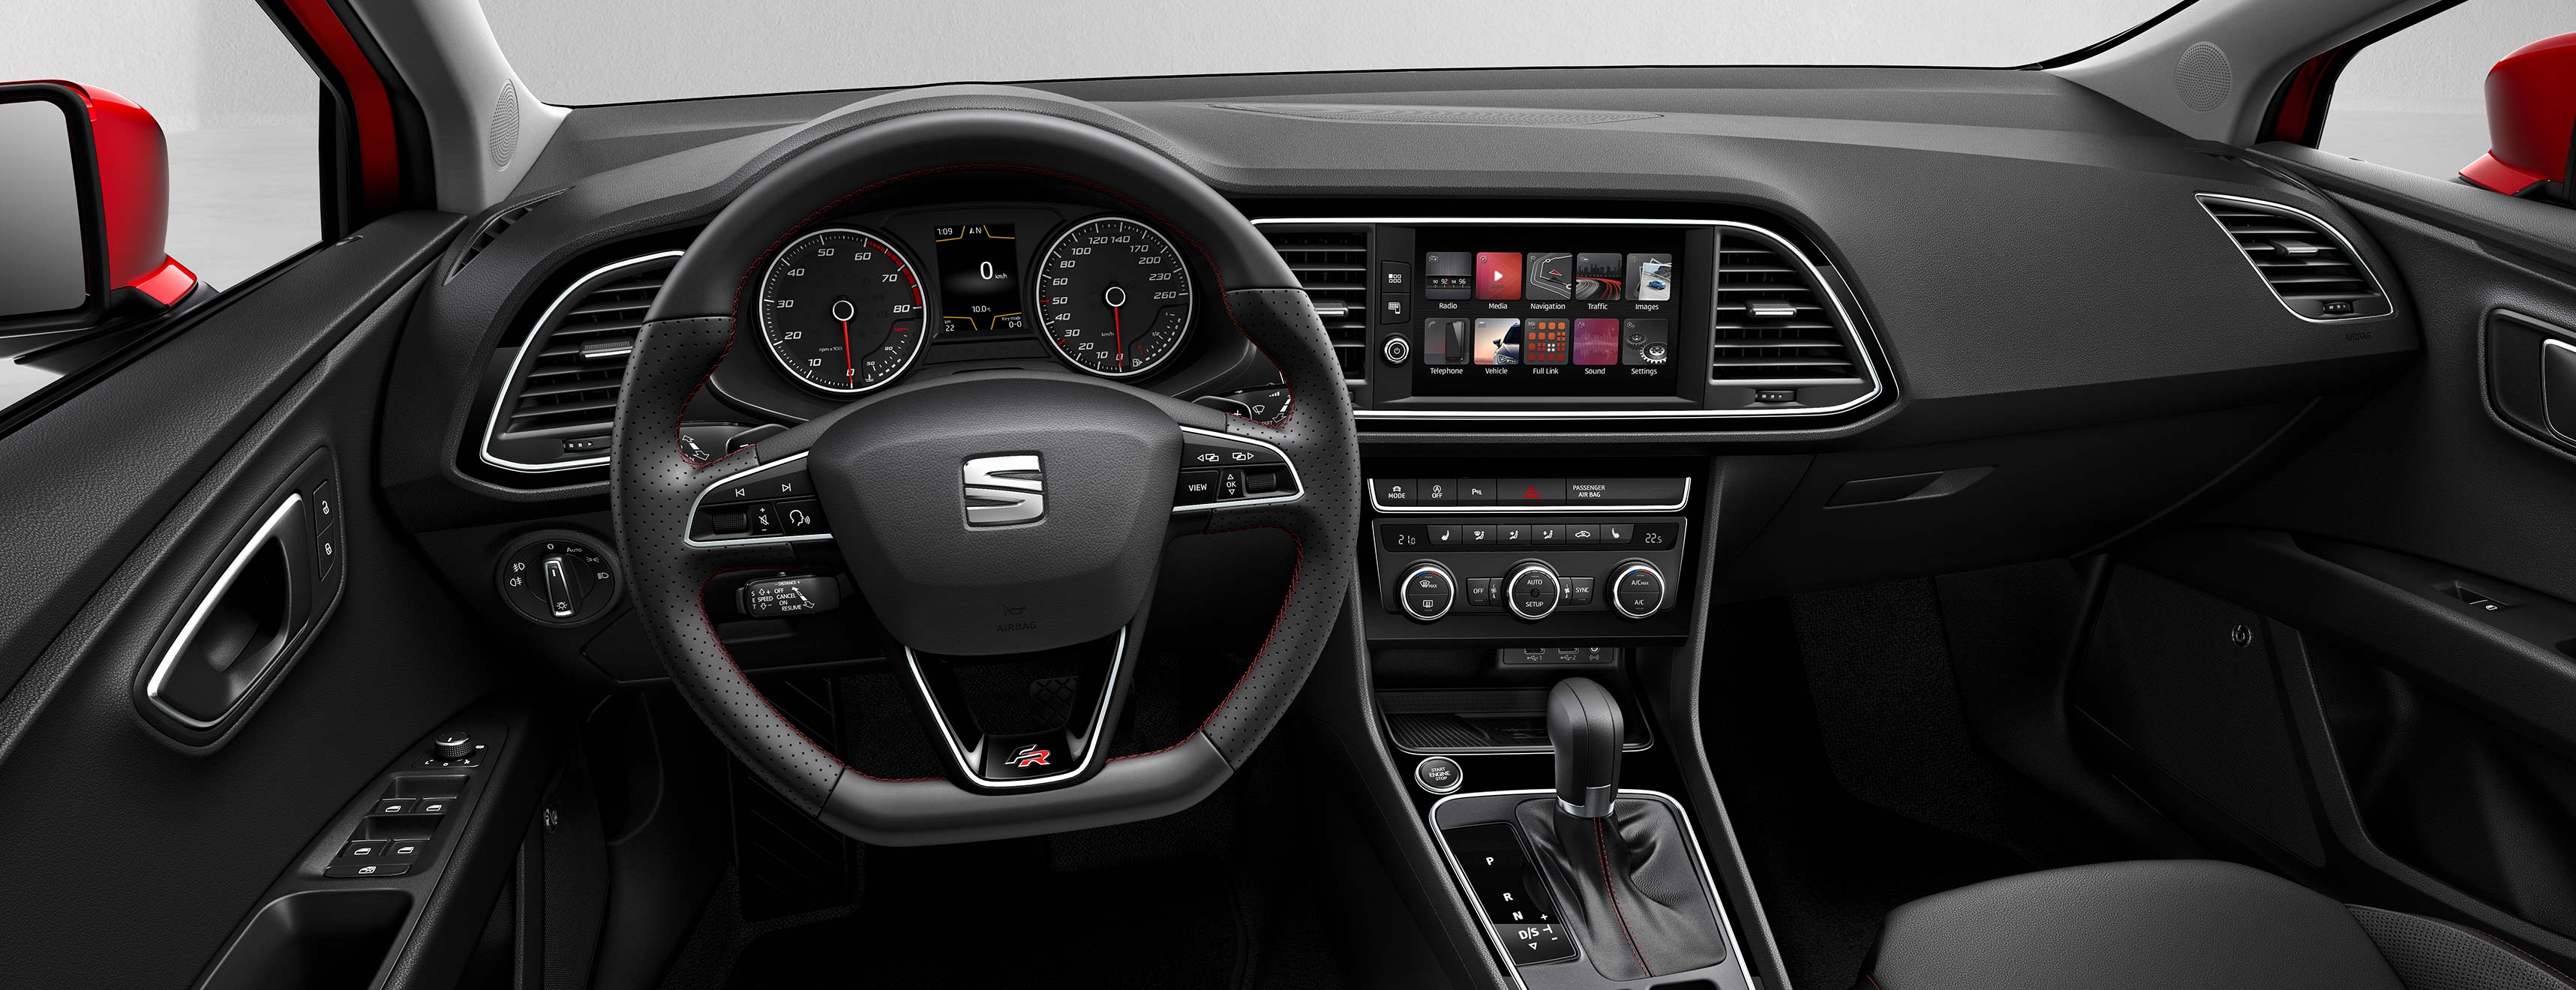 SEAT Leon interior design dashboard steering wheel